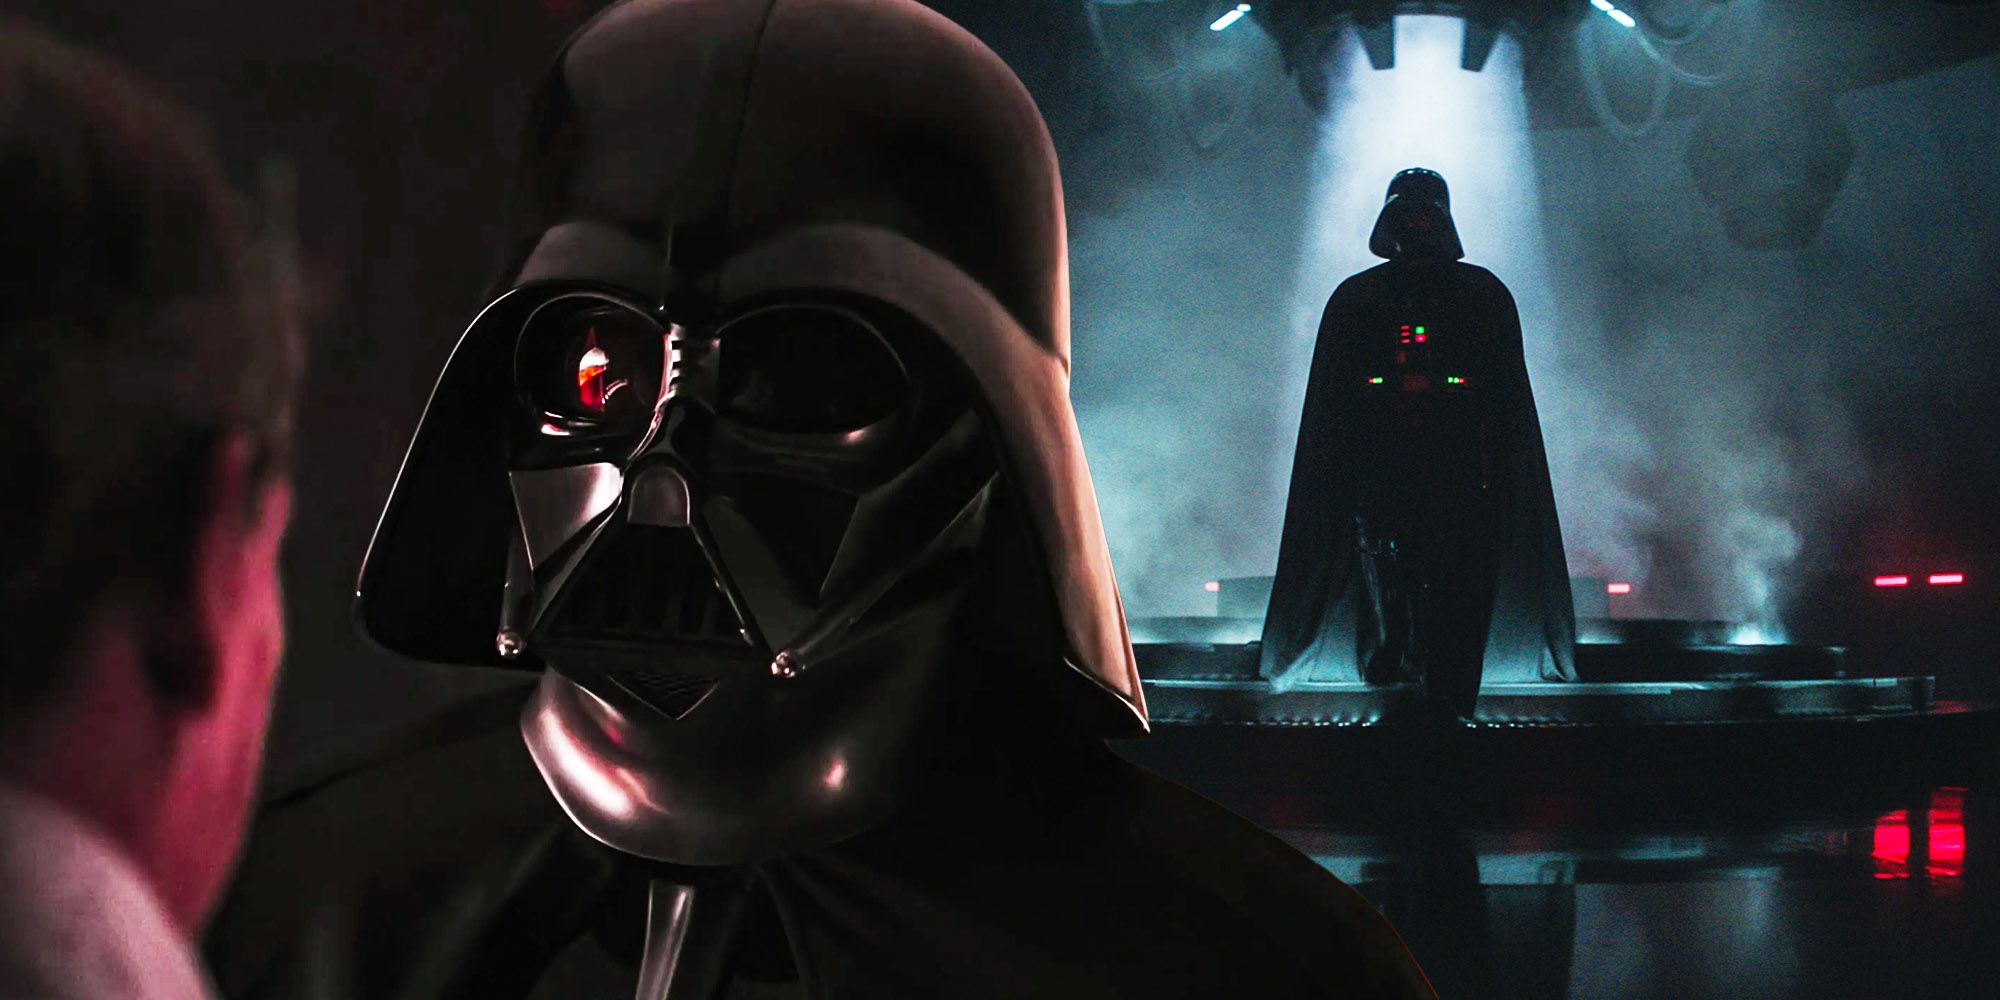 Obi wan kenobi Darth Vader return Rogue one parallels